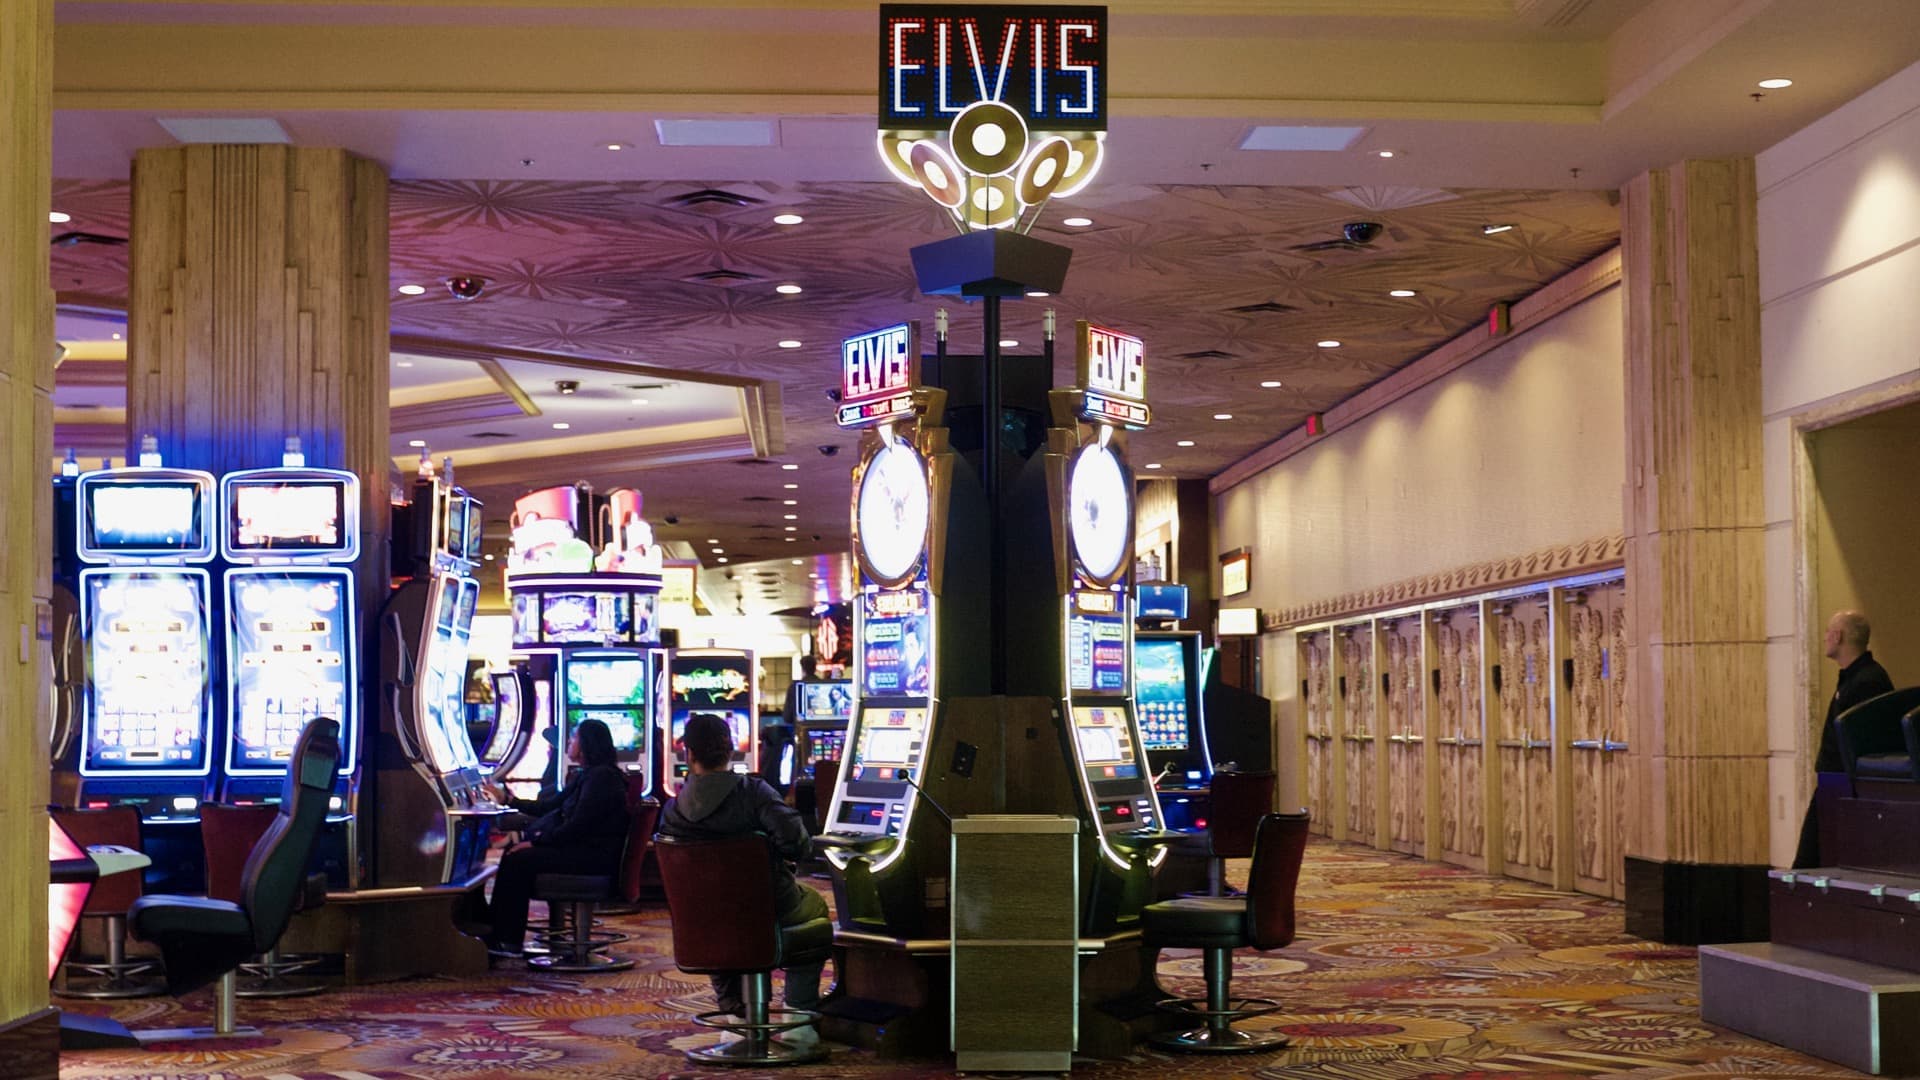 Elvis sign inside casino